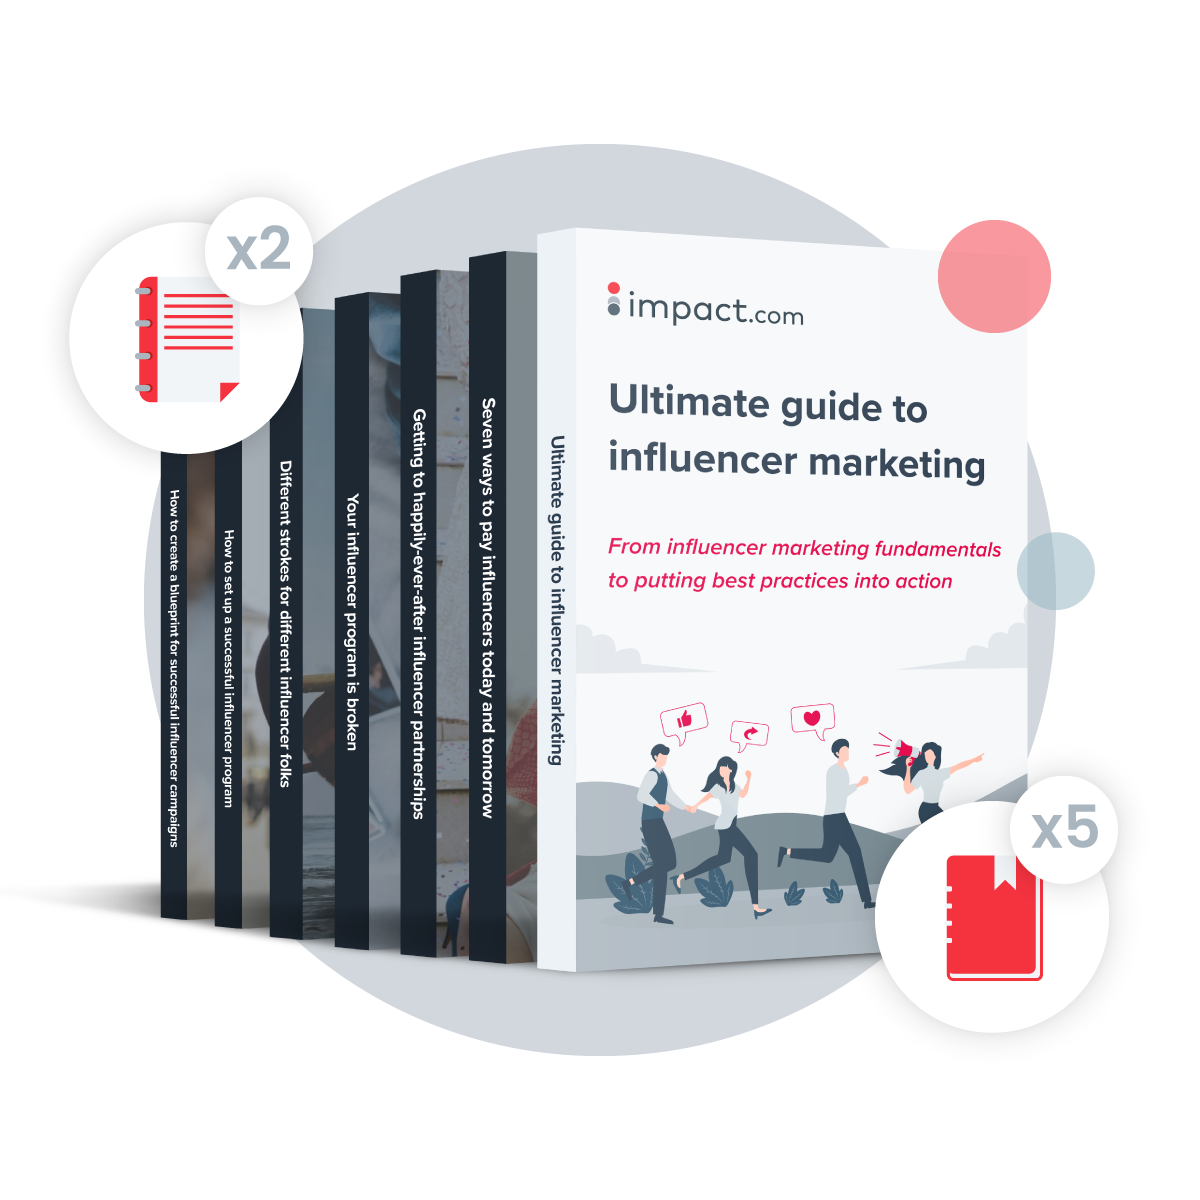 Ulitmate guide to influencer marketing kit